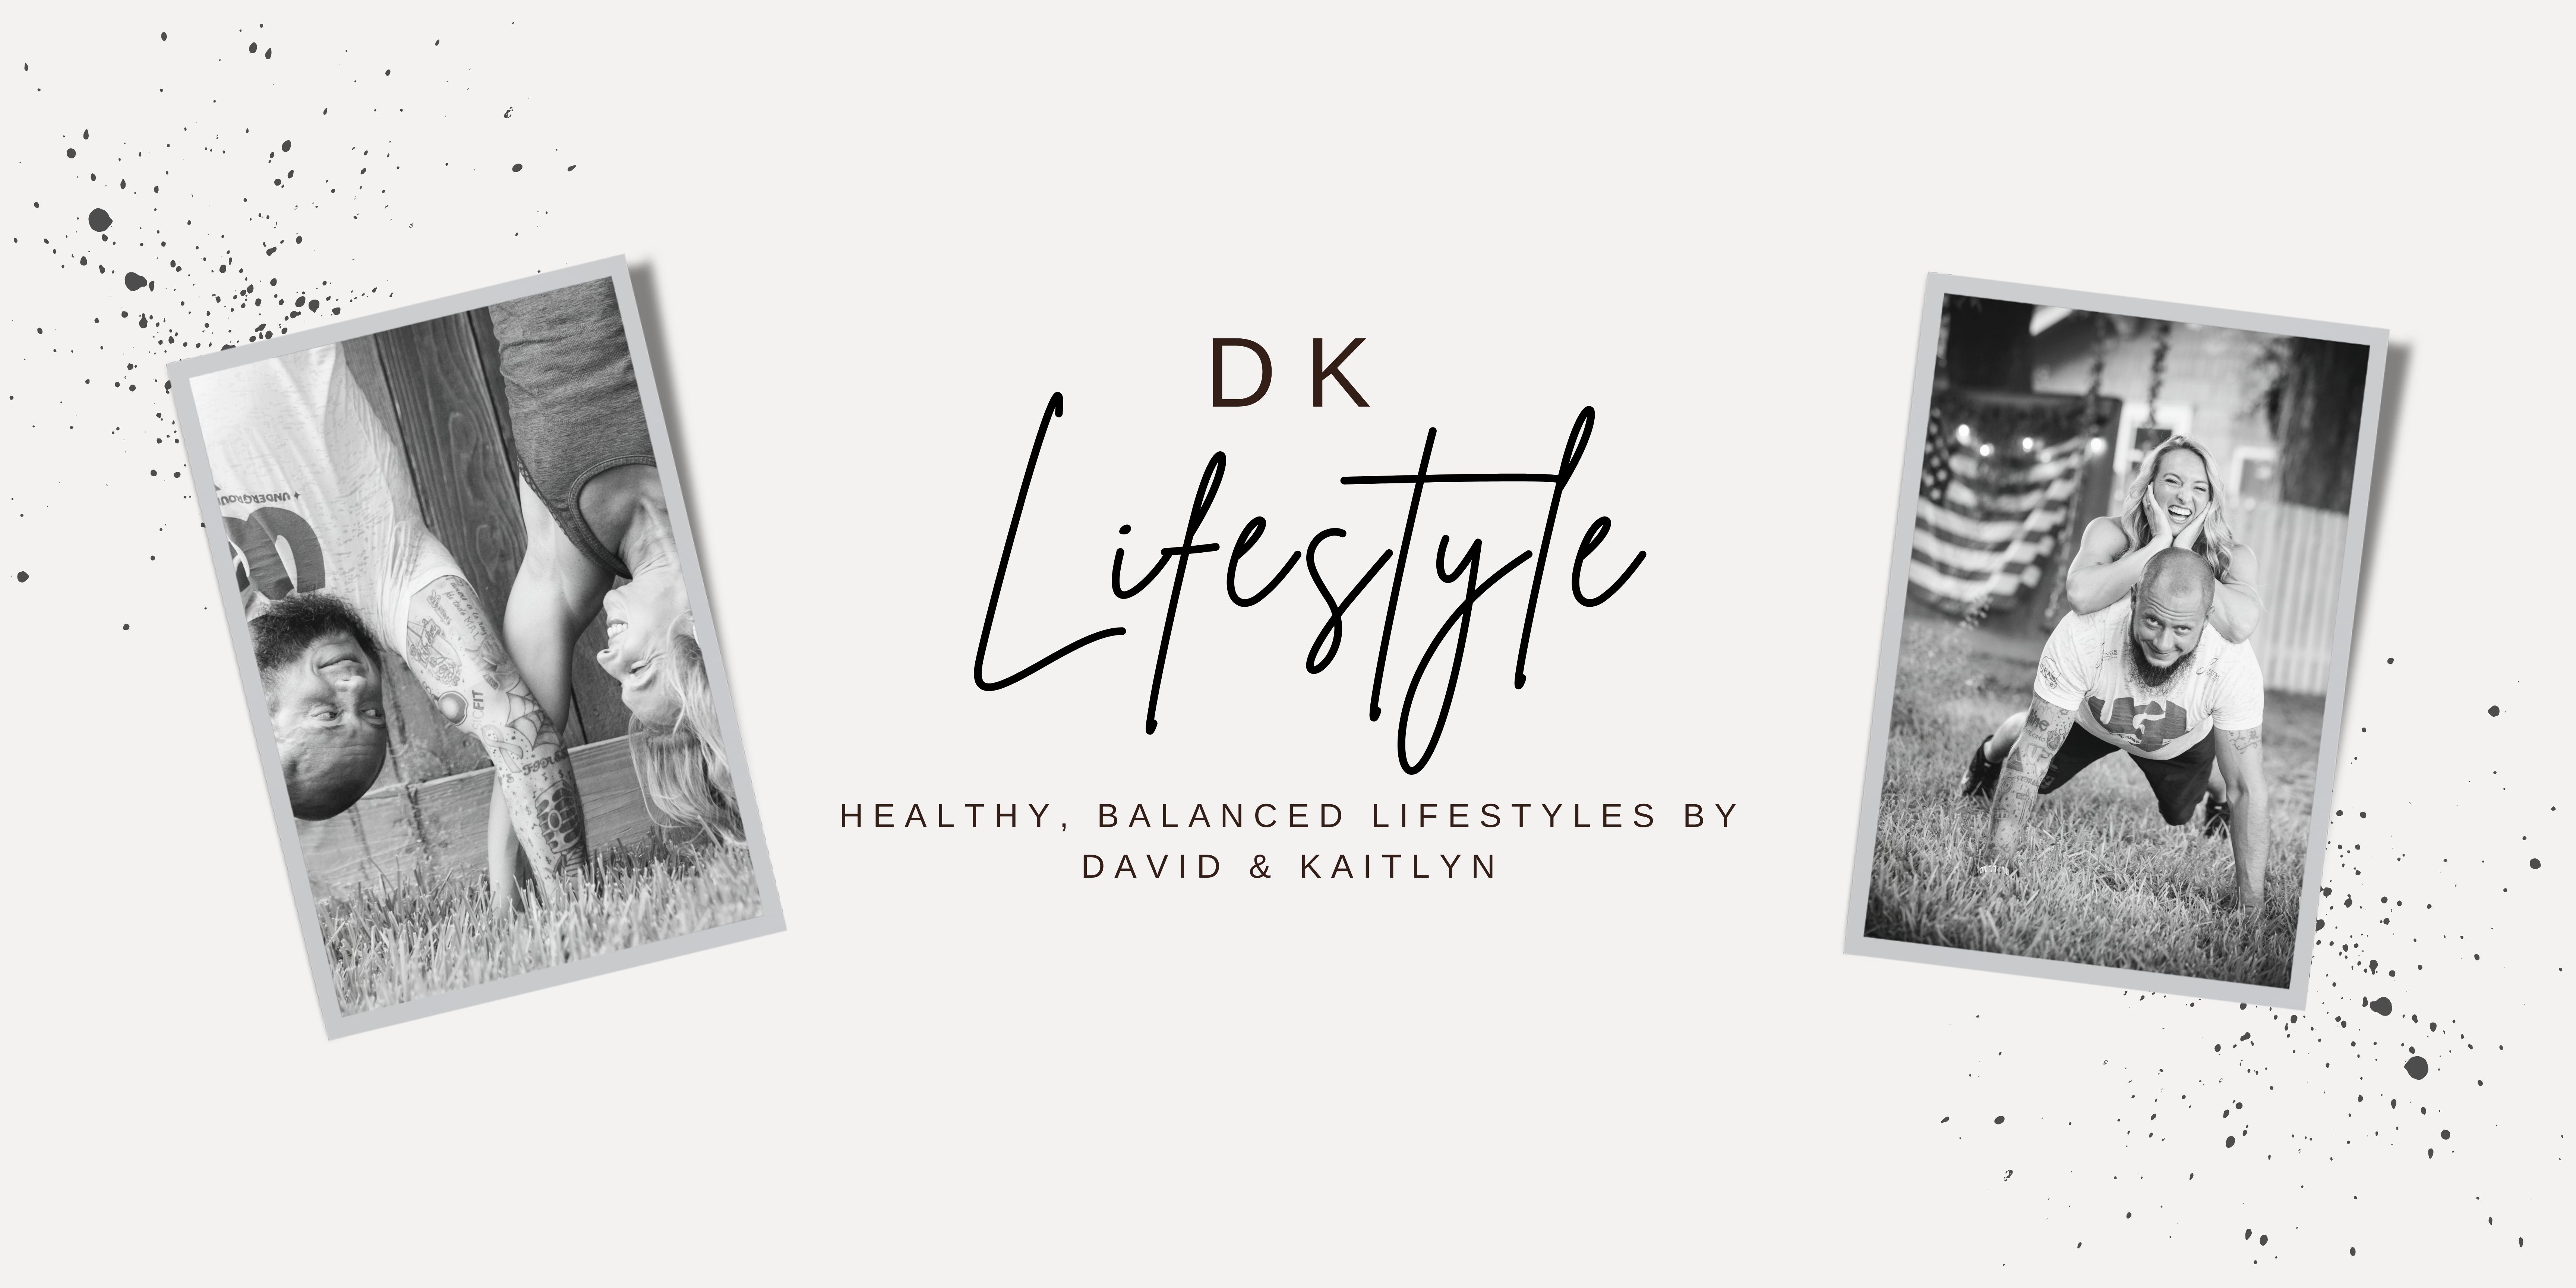 (c) Dk-lifestyle.com